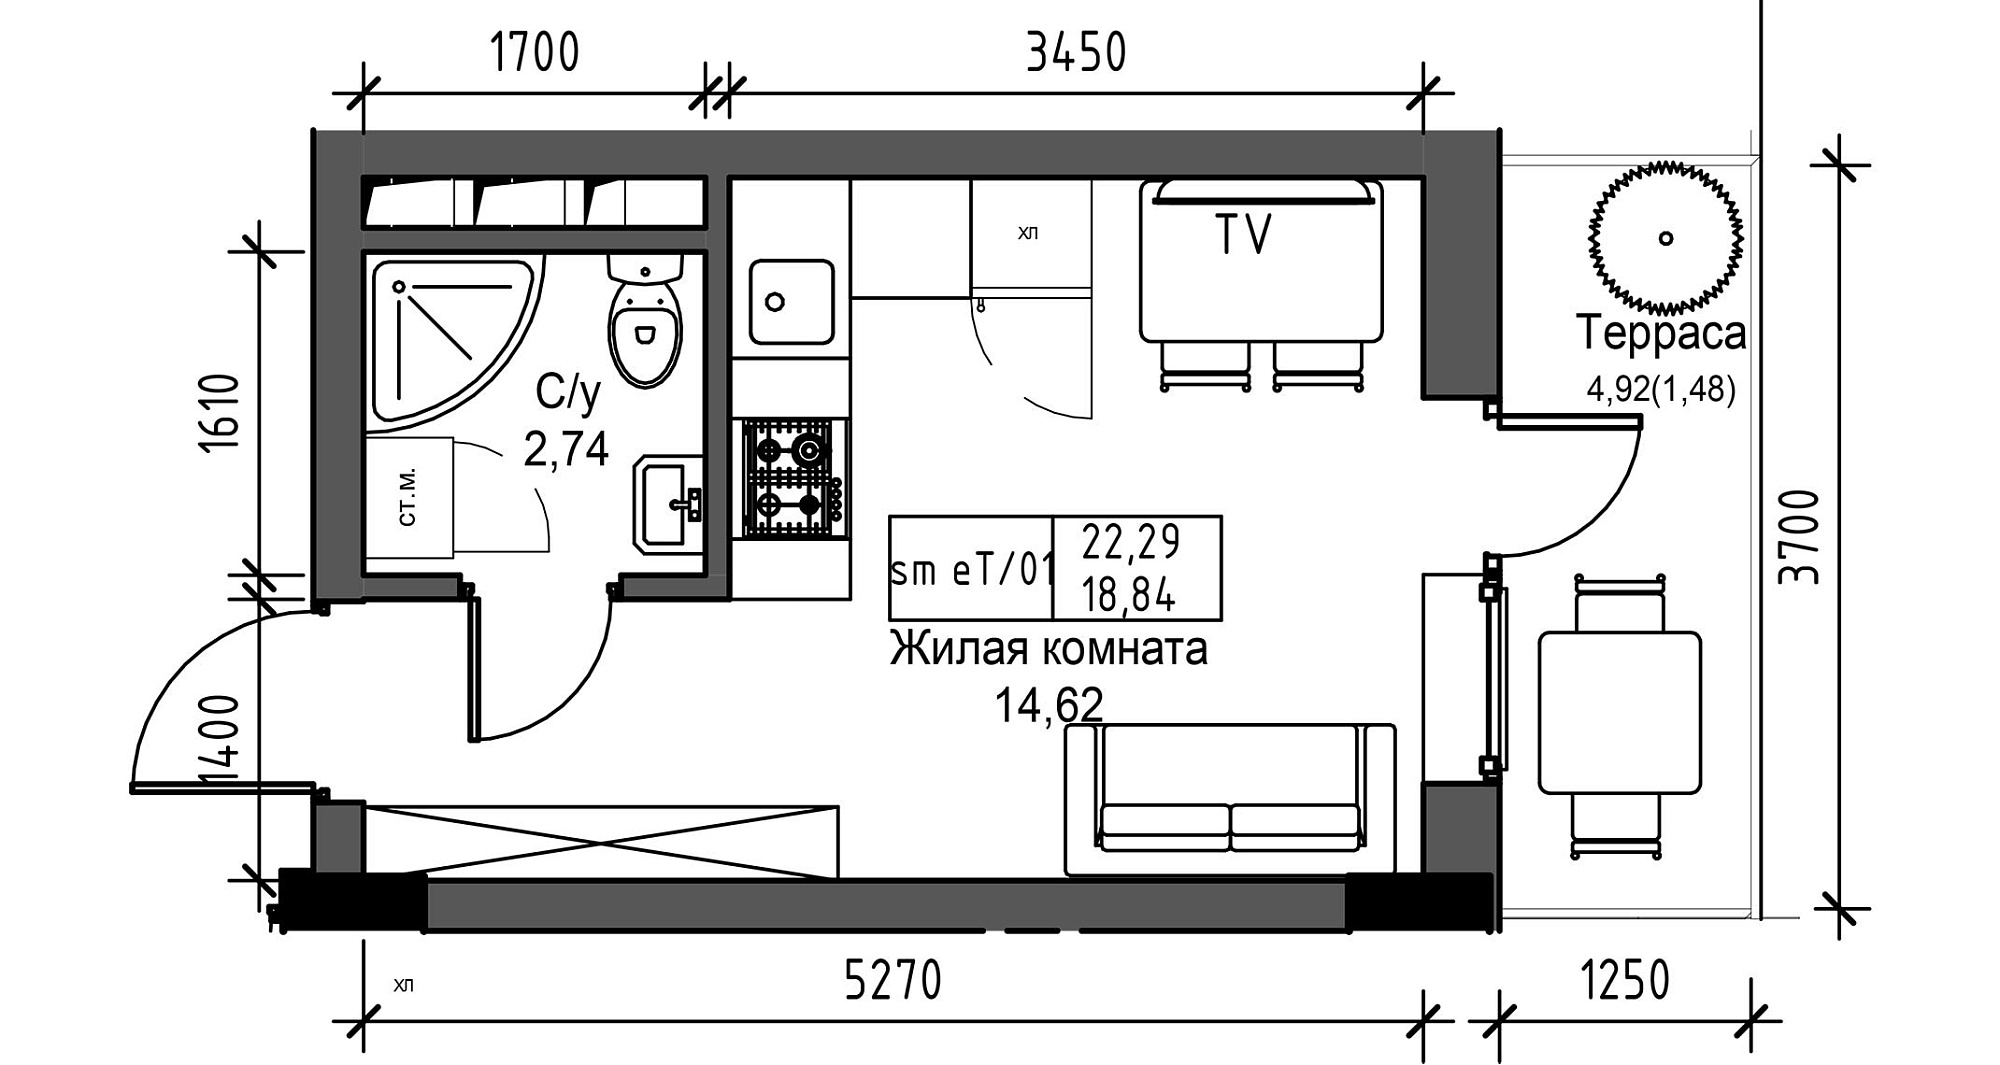 Планування Smart-квартира площею 18.84м2, UM-003-04/0023.